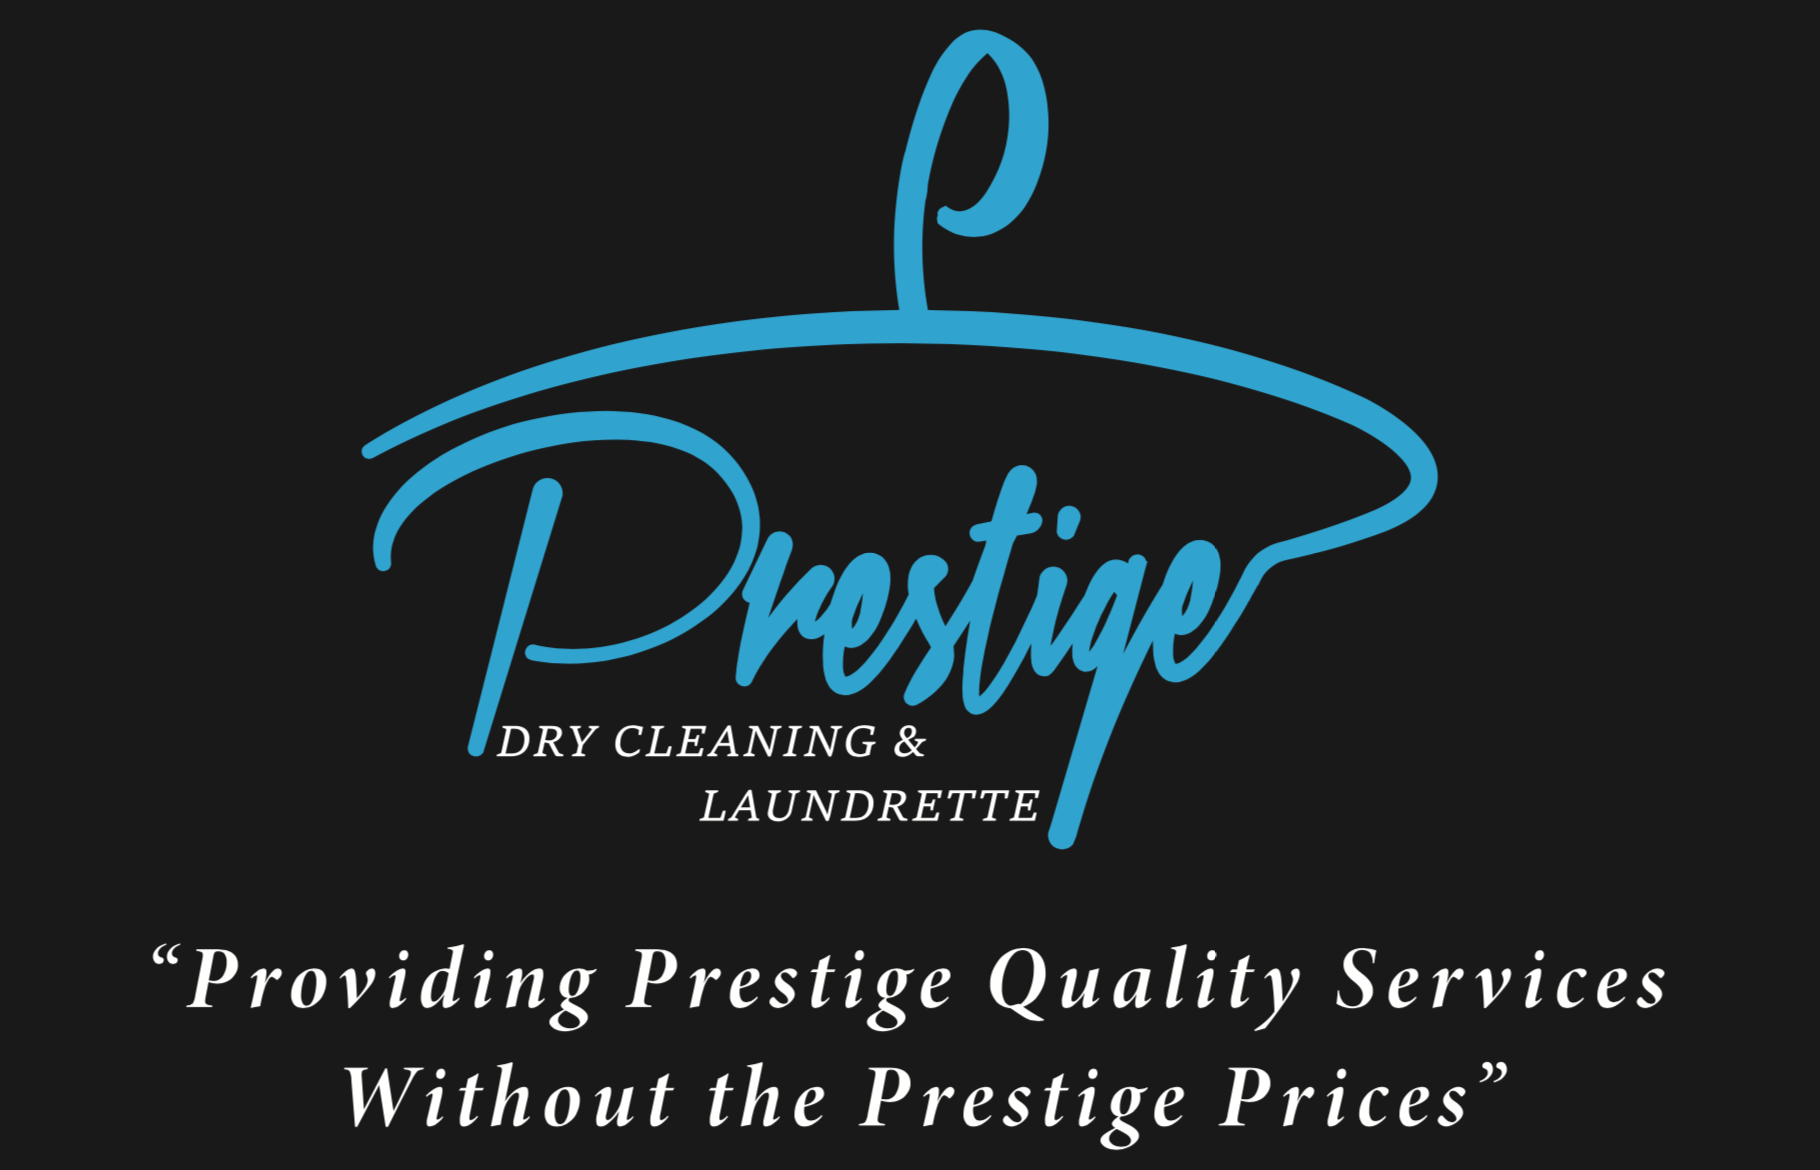 Prestige Dry Cleaners Laundrette